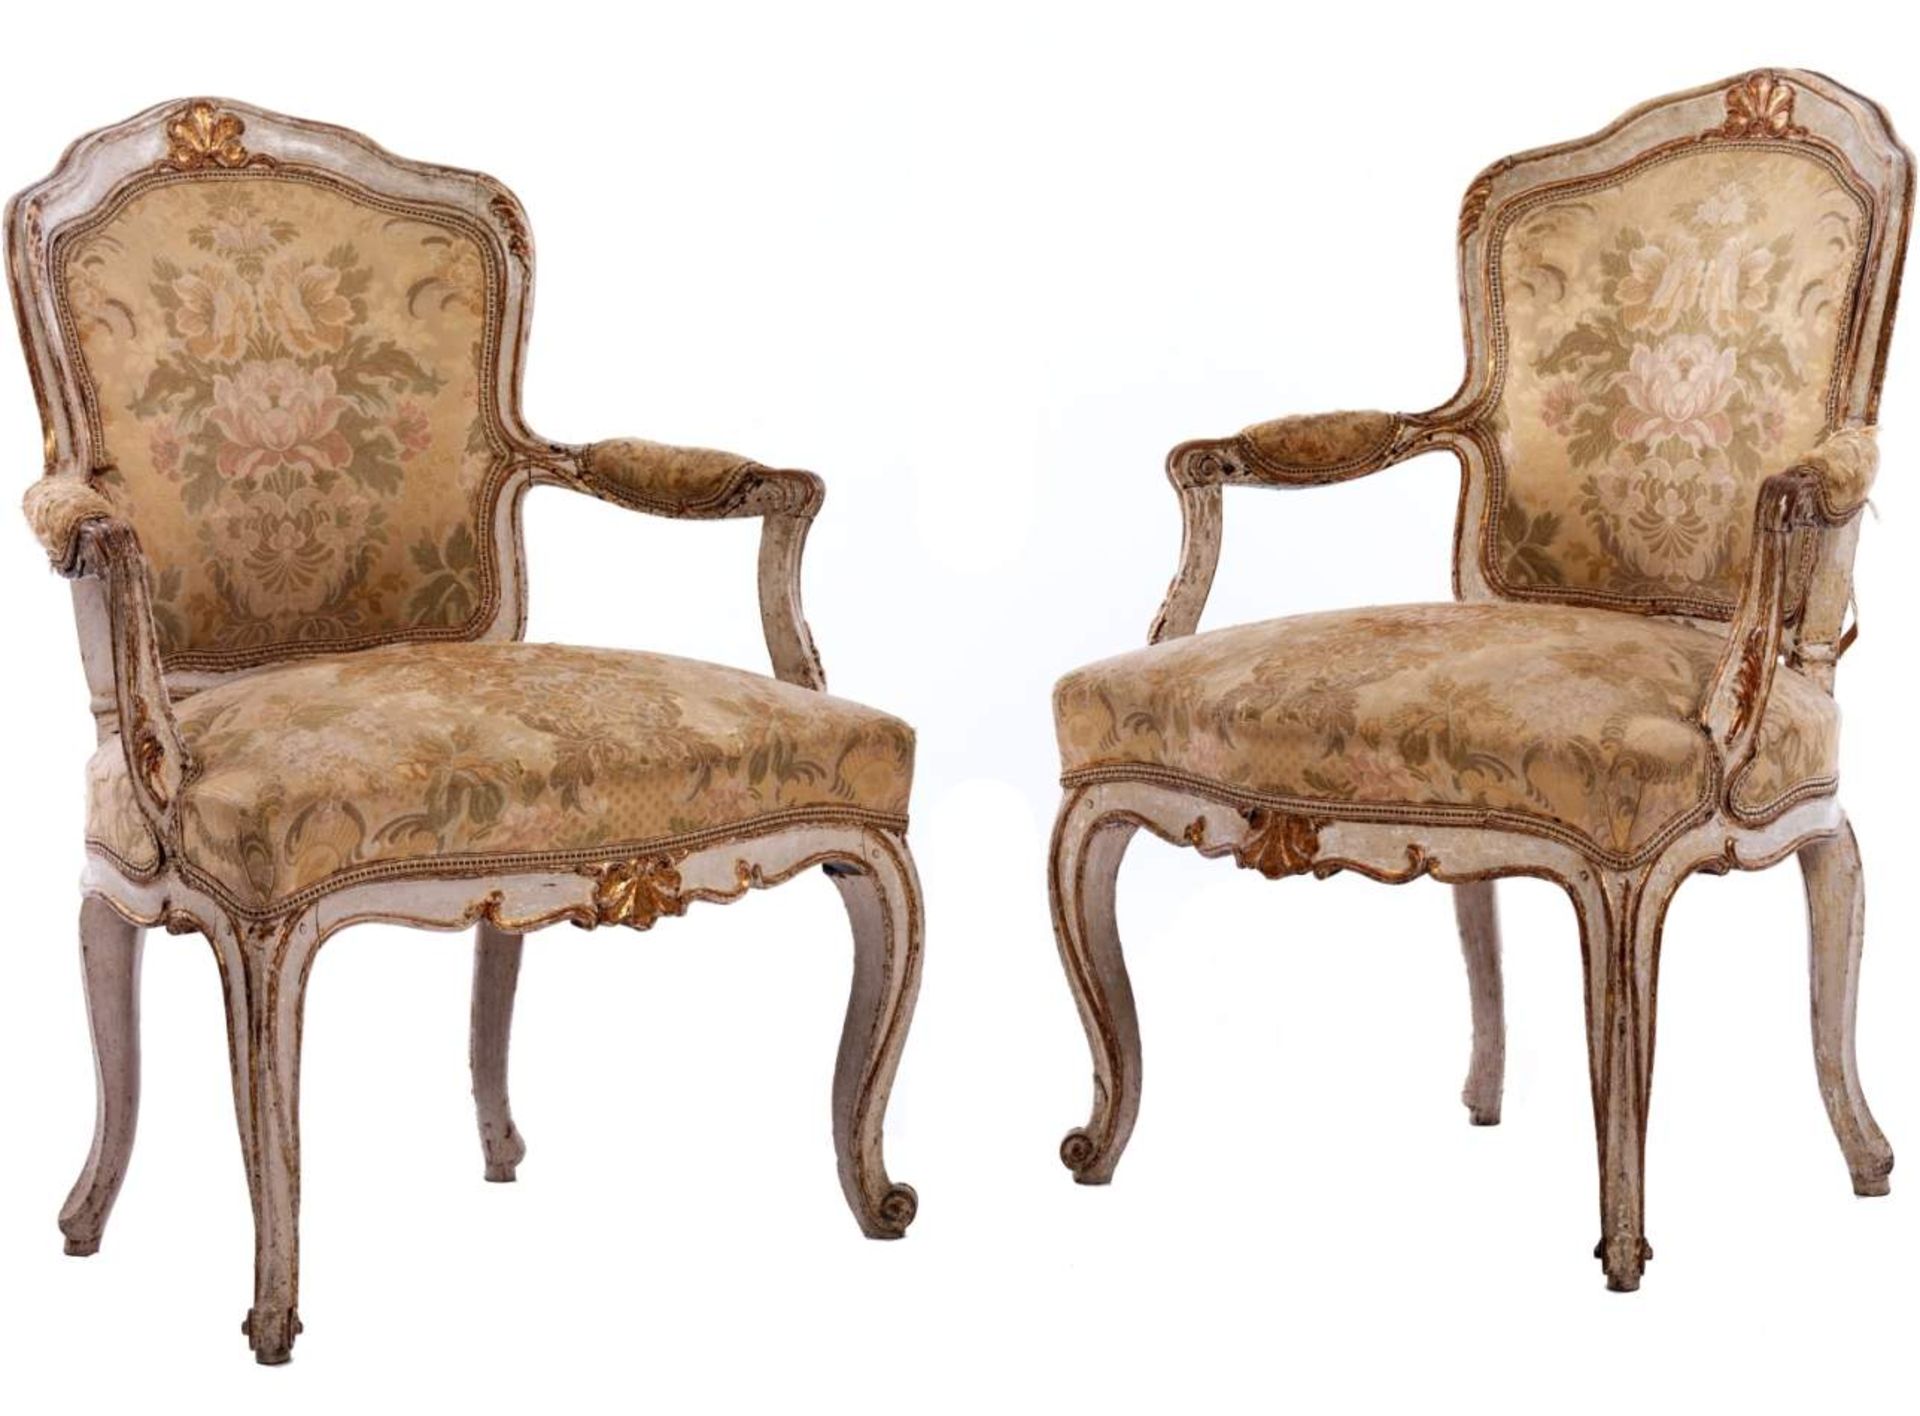 Pair of small armchairsHeight: 87 cm. Width: ca. 67 cm. Depth: ca. 50 cm. France, 18th century. - Bild 5 aus 5